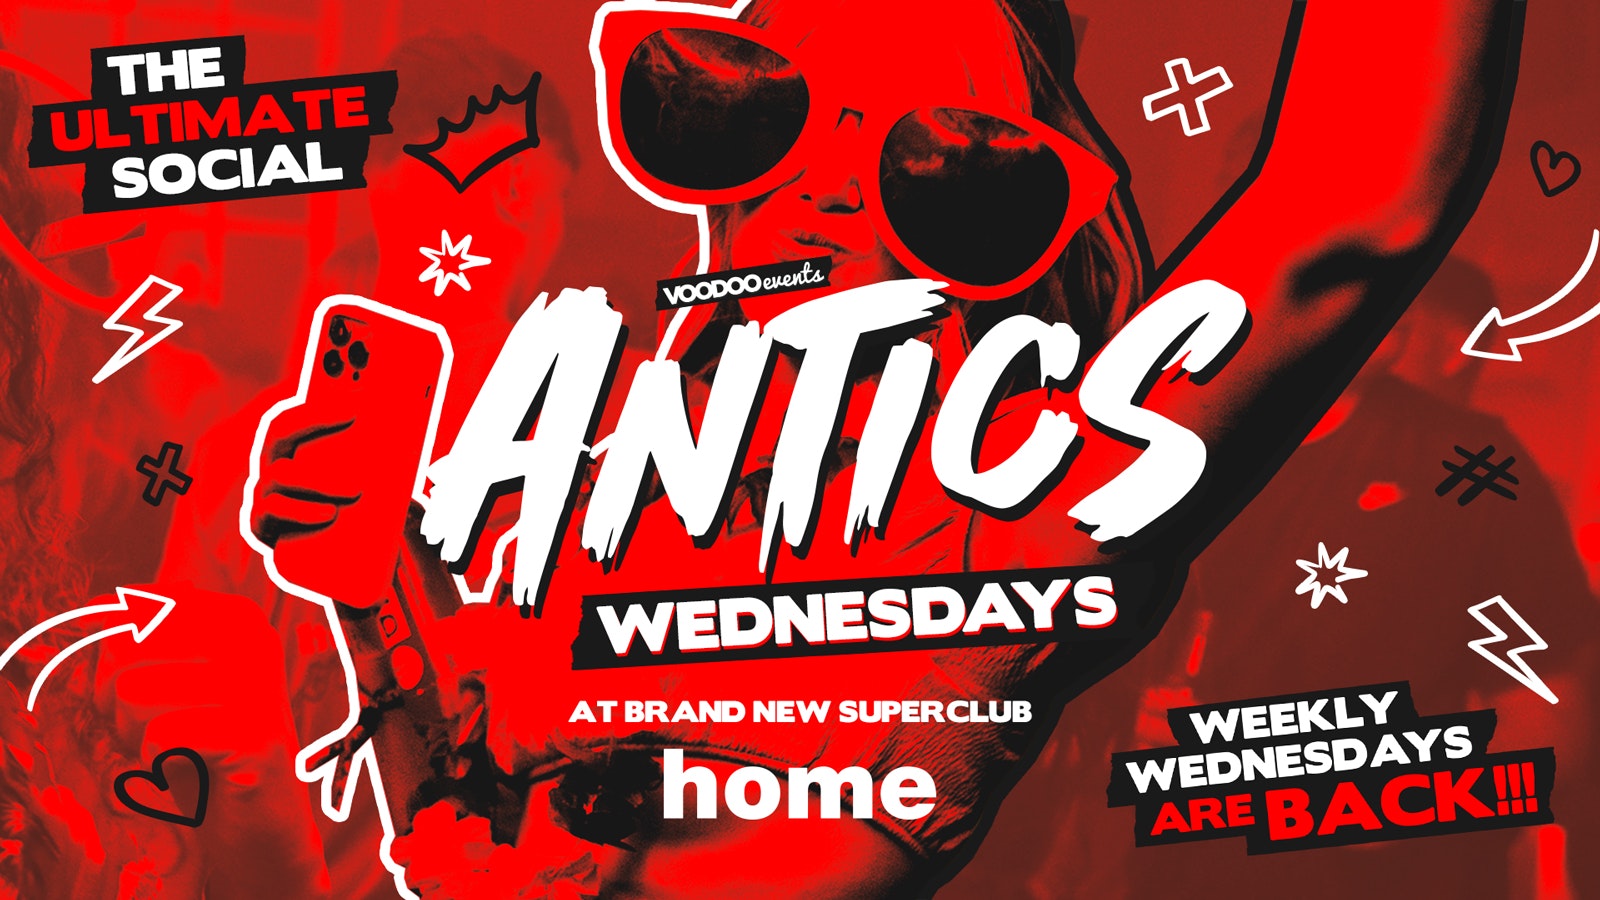 Antics @ THE BRAND NEW SUPER CLUB HOME – Wednesday 10th April